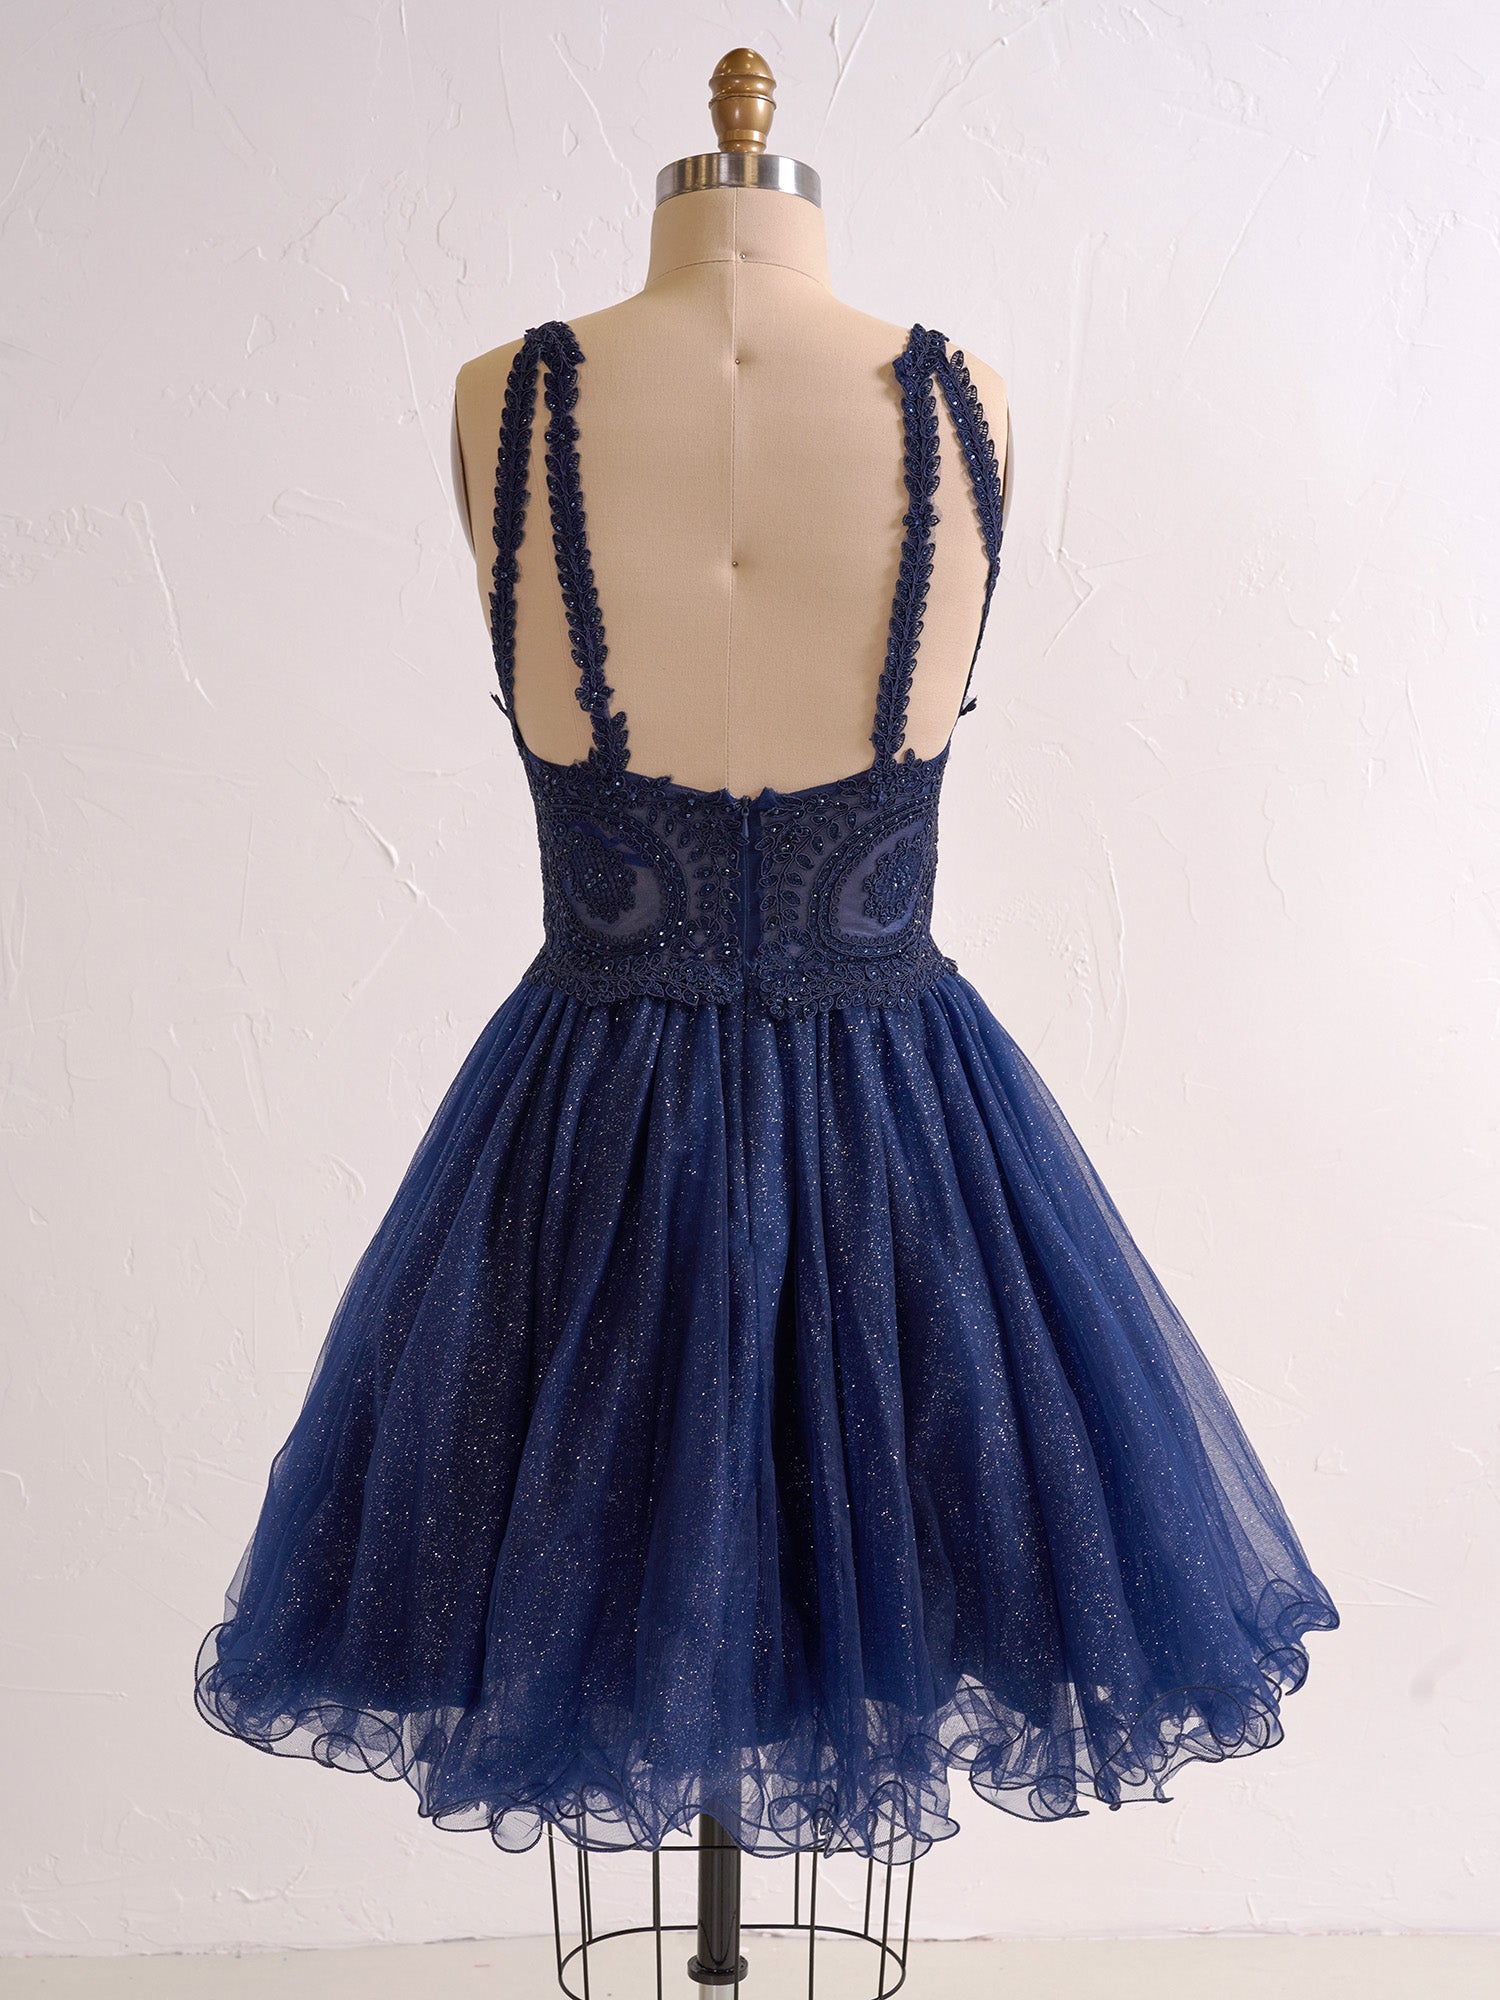 Georgina | Embellished Embroidery Tulle Short Cocktail Dress